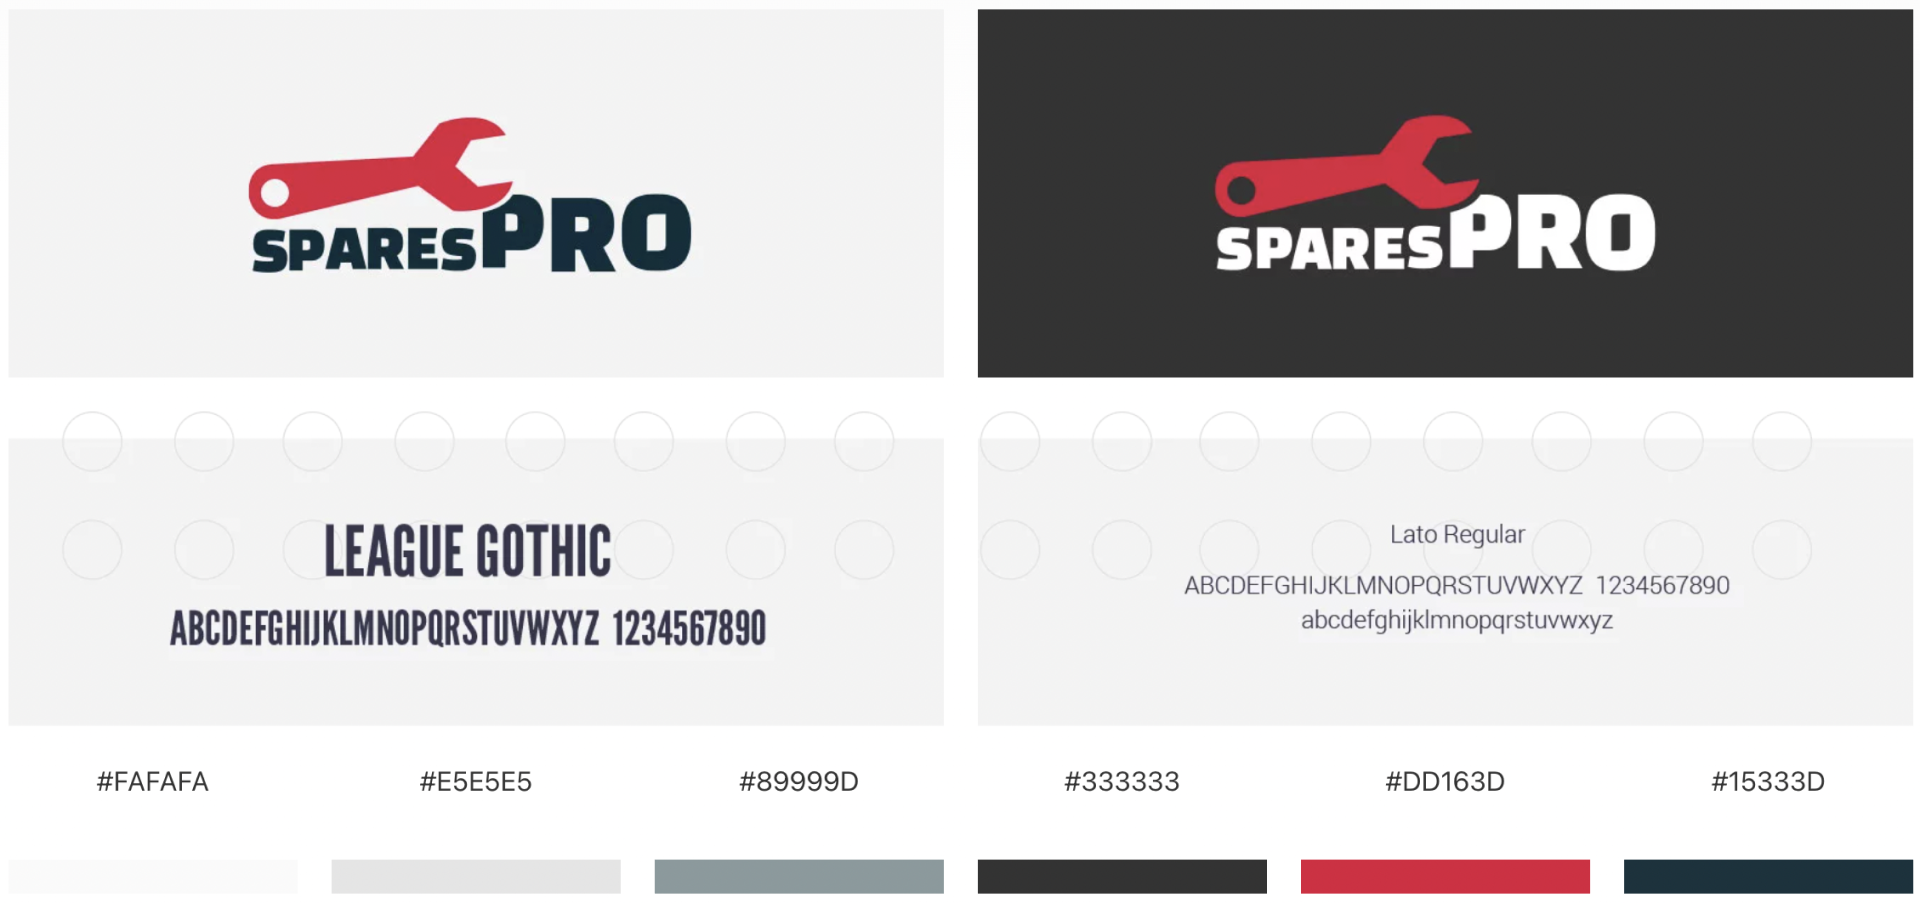 SparesPRO Brand Guide